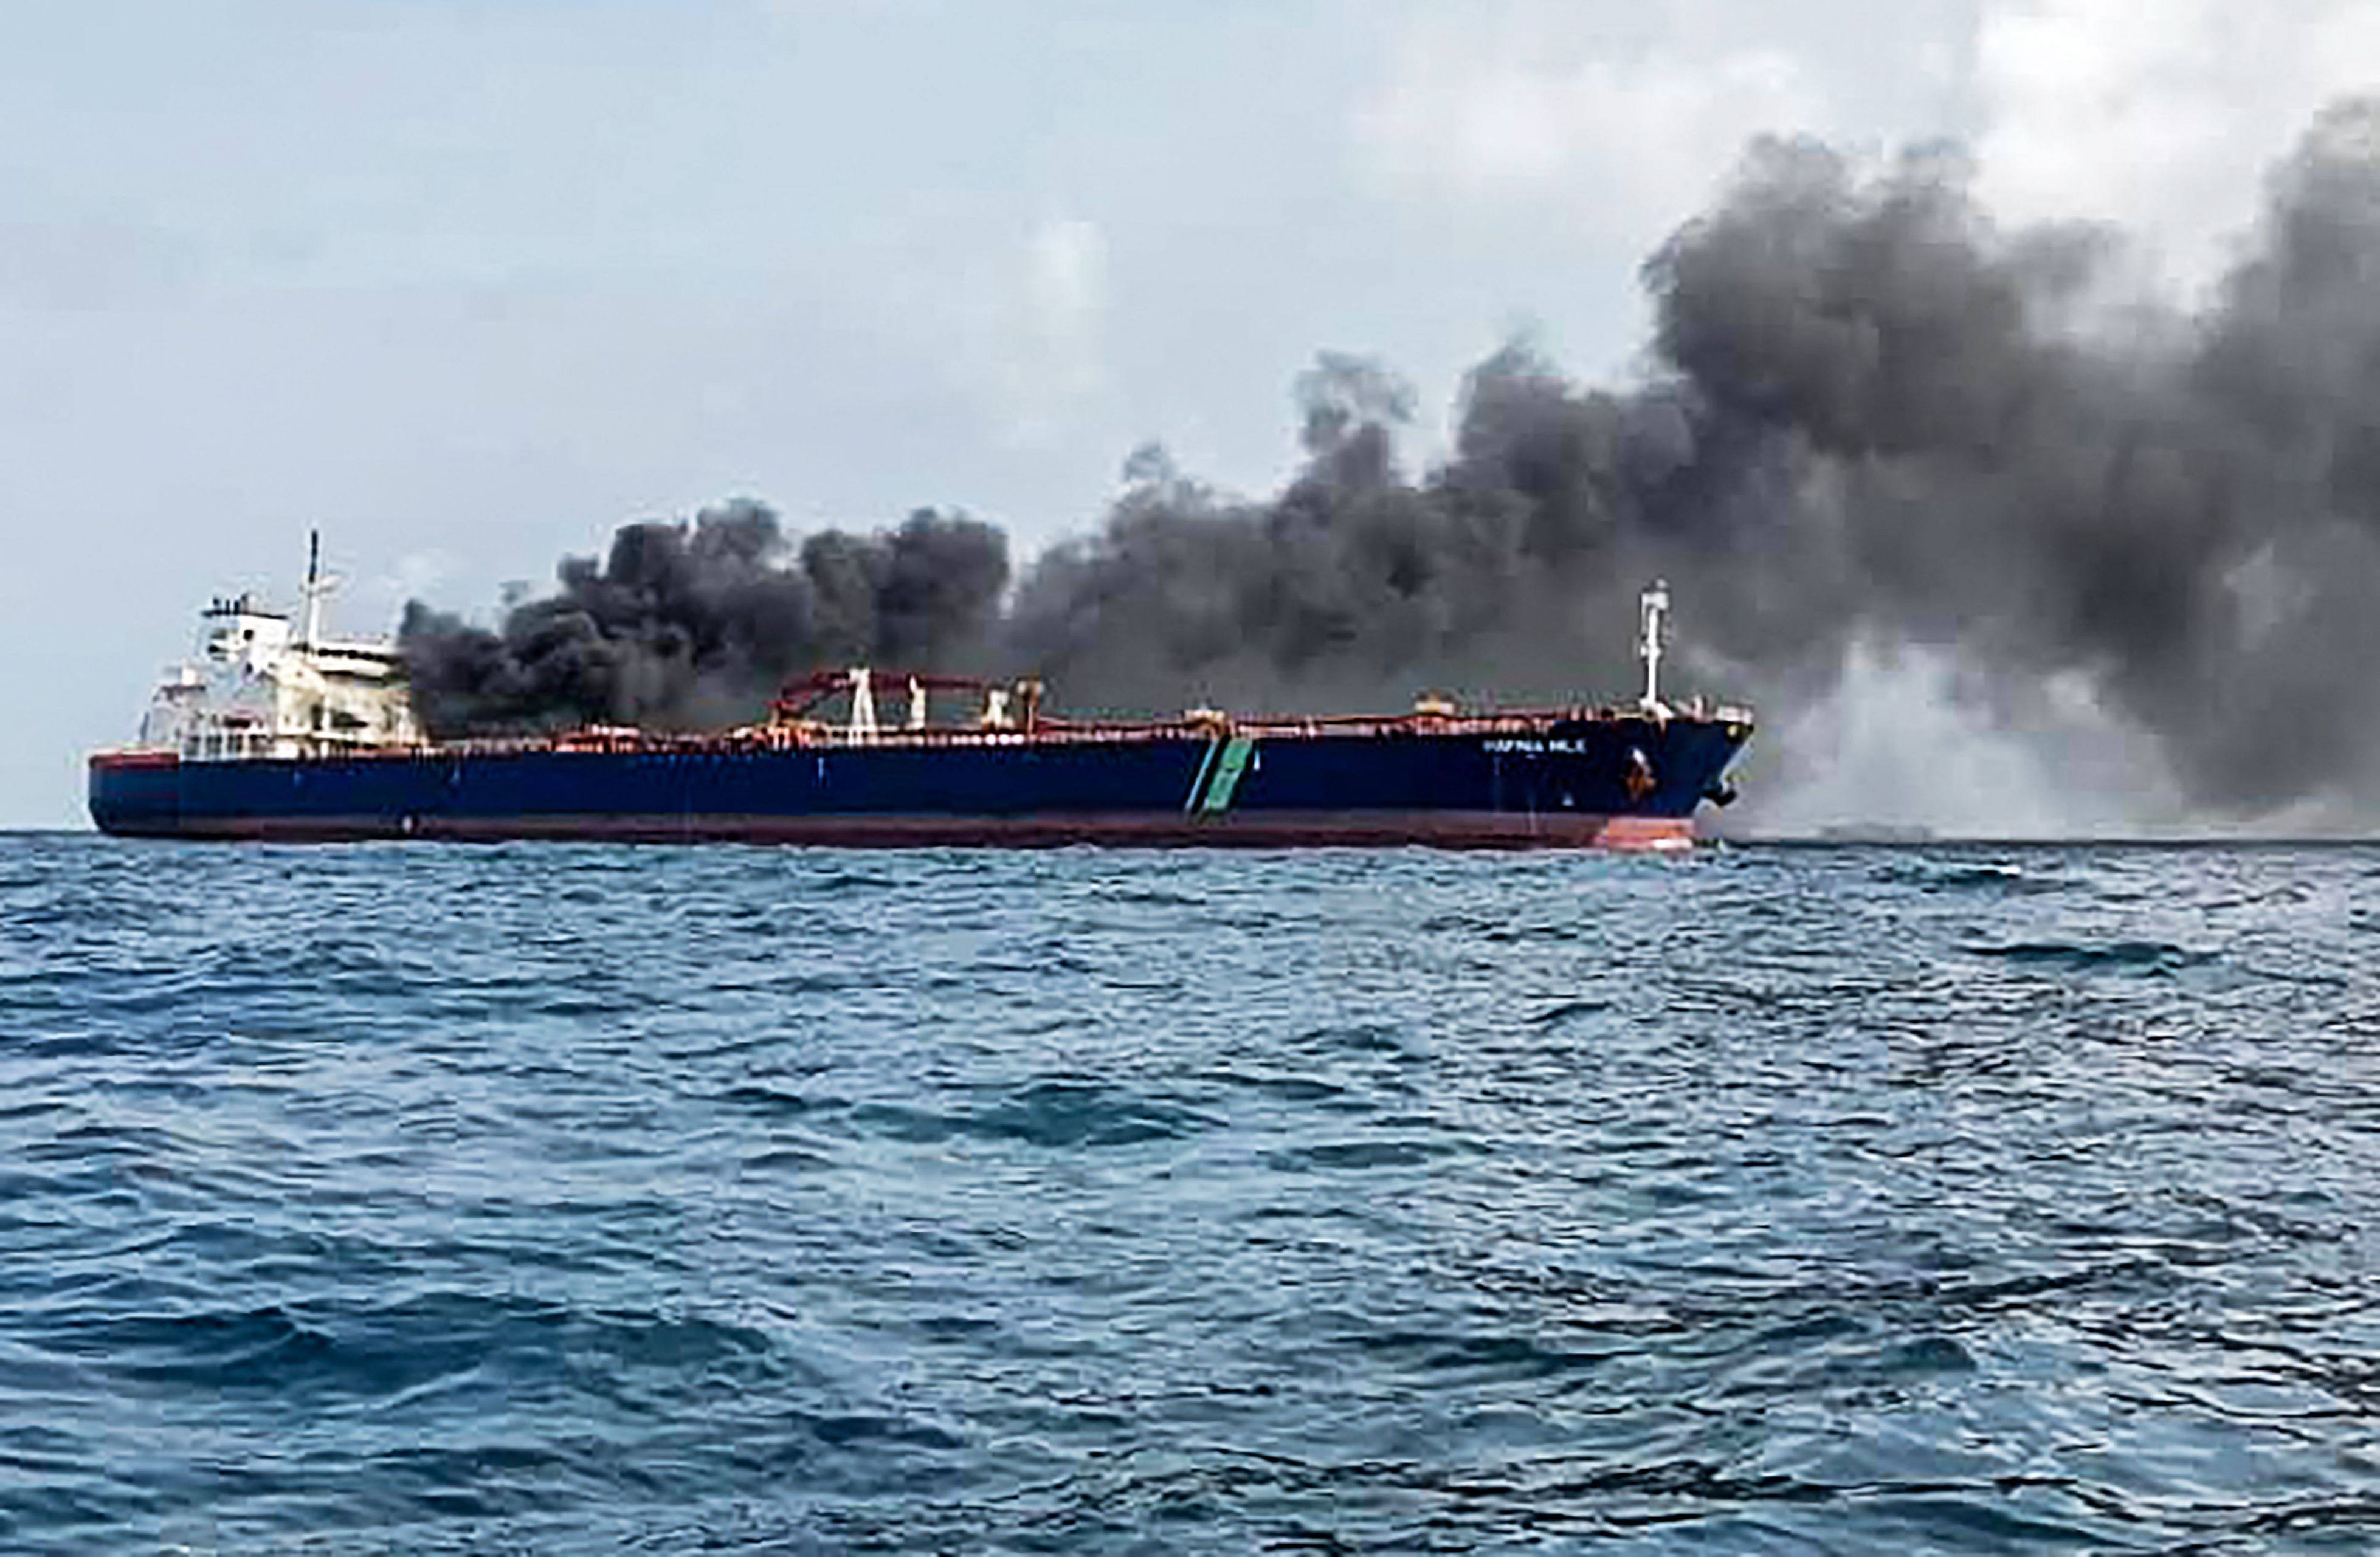 The Singapore-flagged tanker Hafnia Nile on fire in Tanjung Sedili, near Singapore. Photo: Handout / Malaysian Maritime Enforcement / AFP